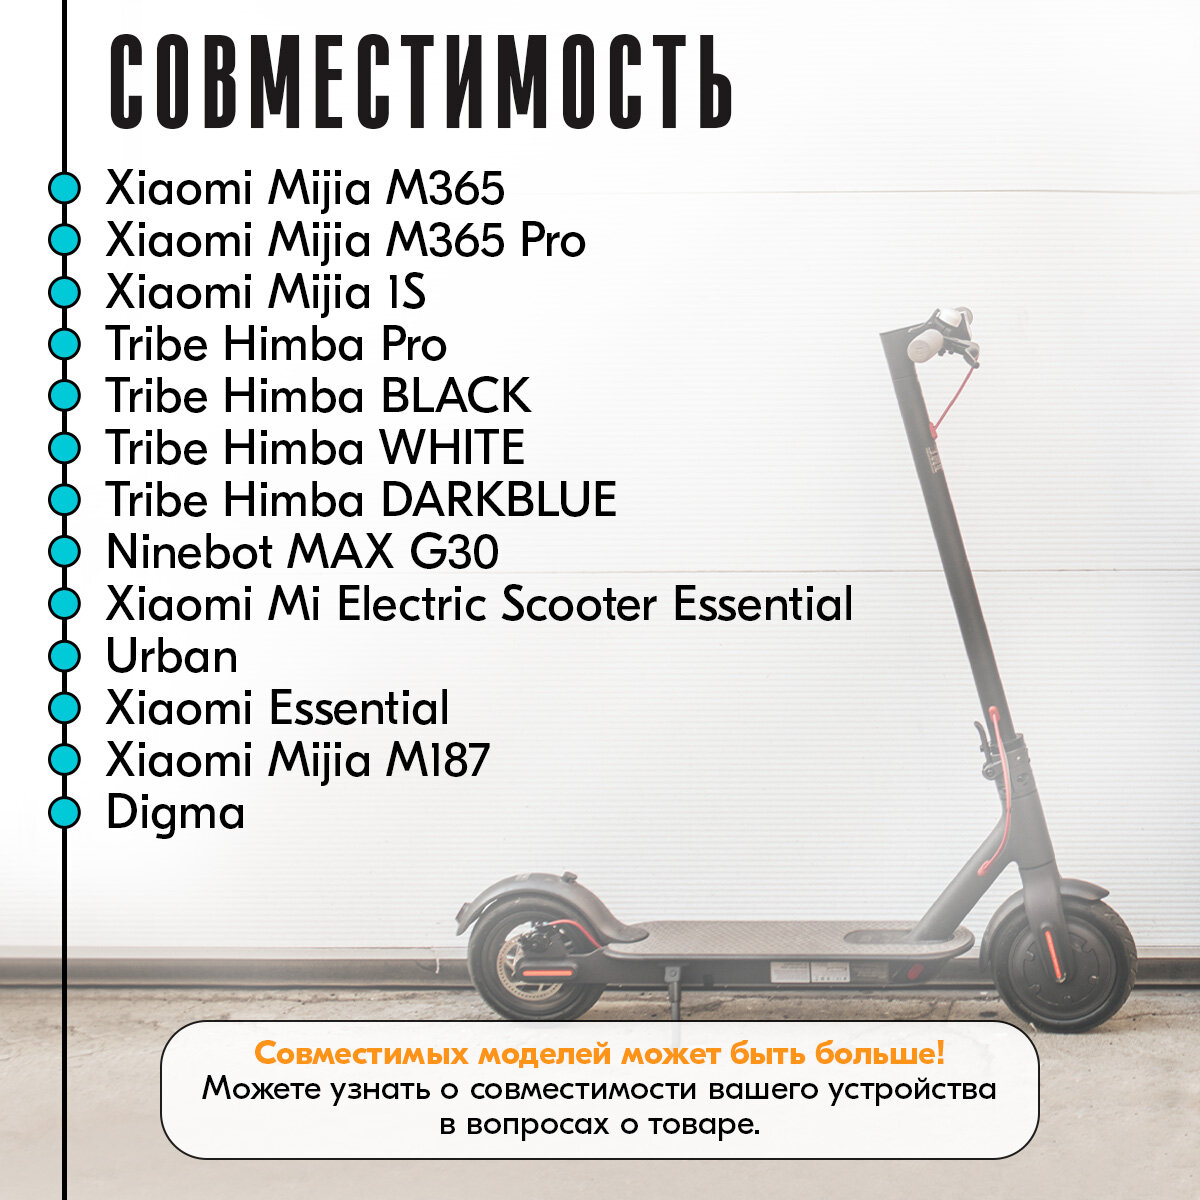 Курок газа для электросамоката Xiaomi Mijia m365, 1s, m365 Pro, Essential / TRIBE HIMBA / Ninebot MAX G30 и тд